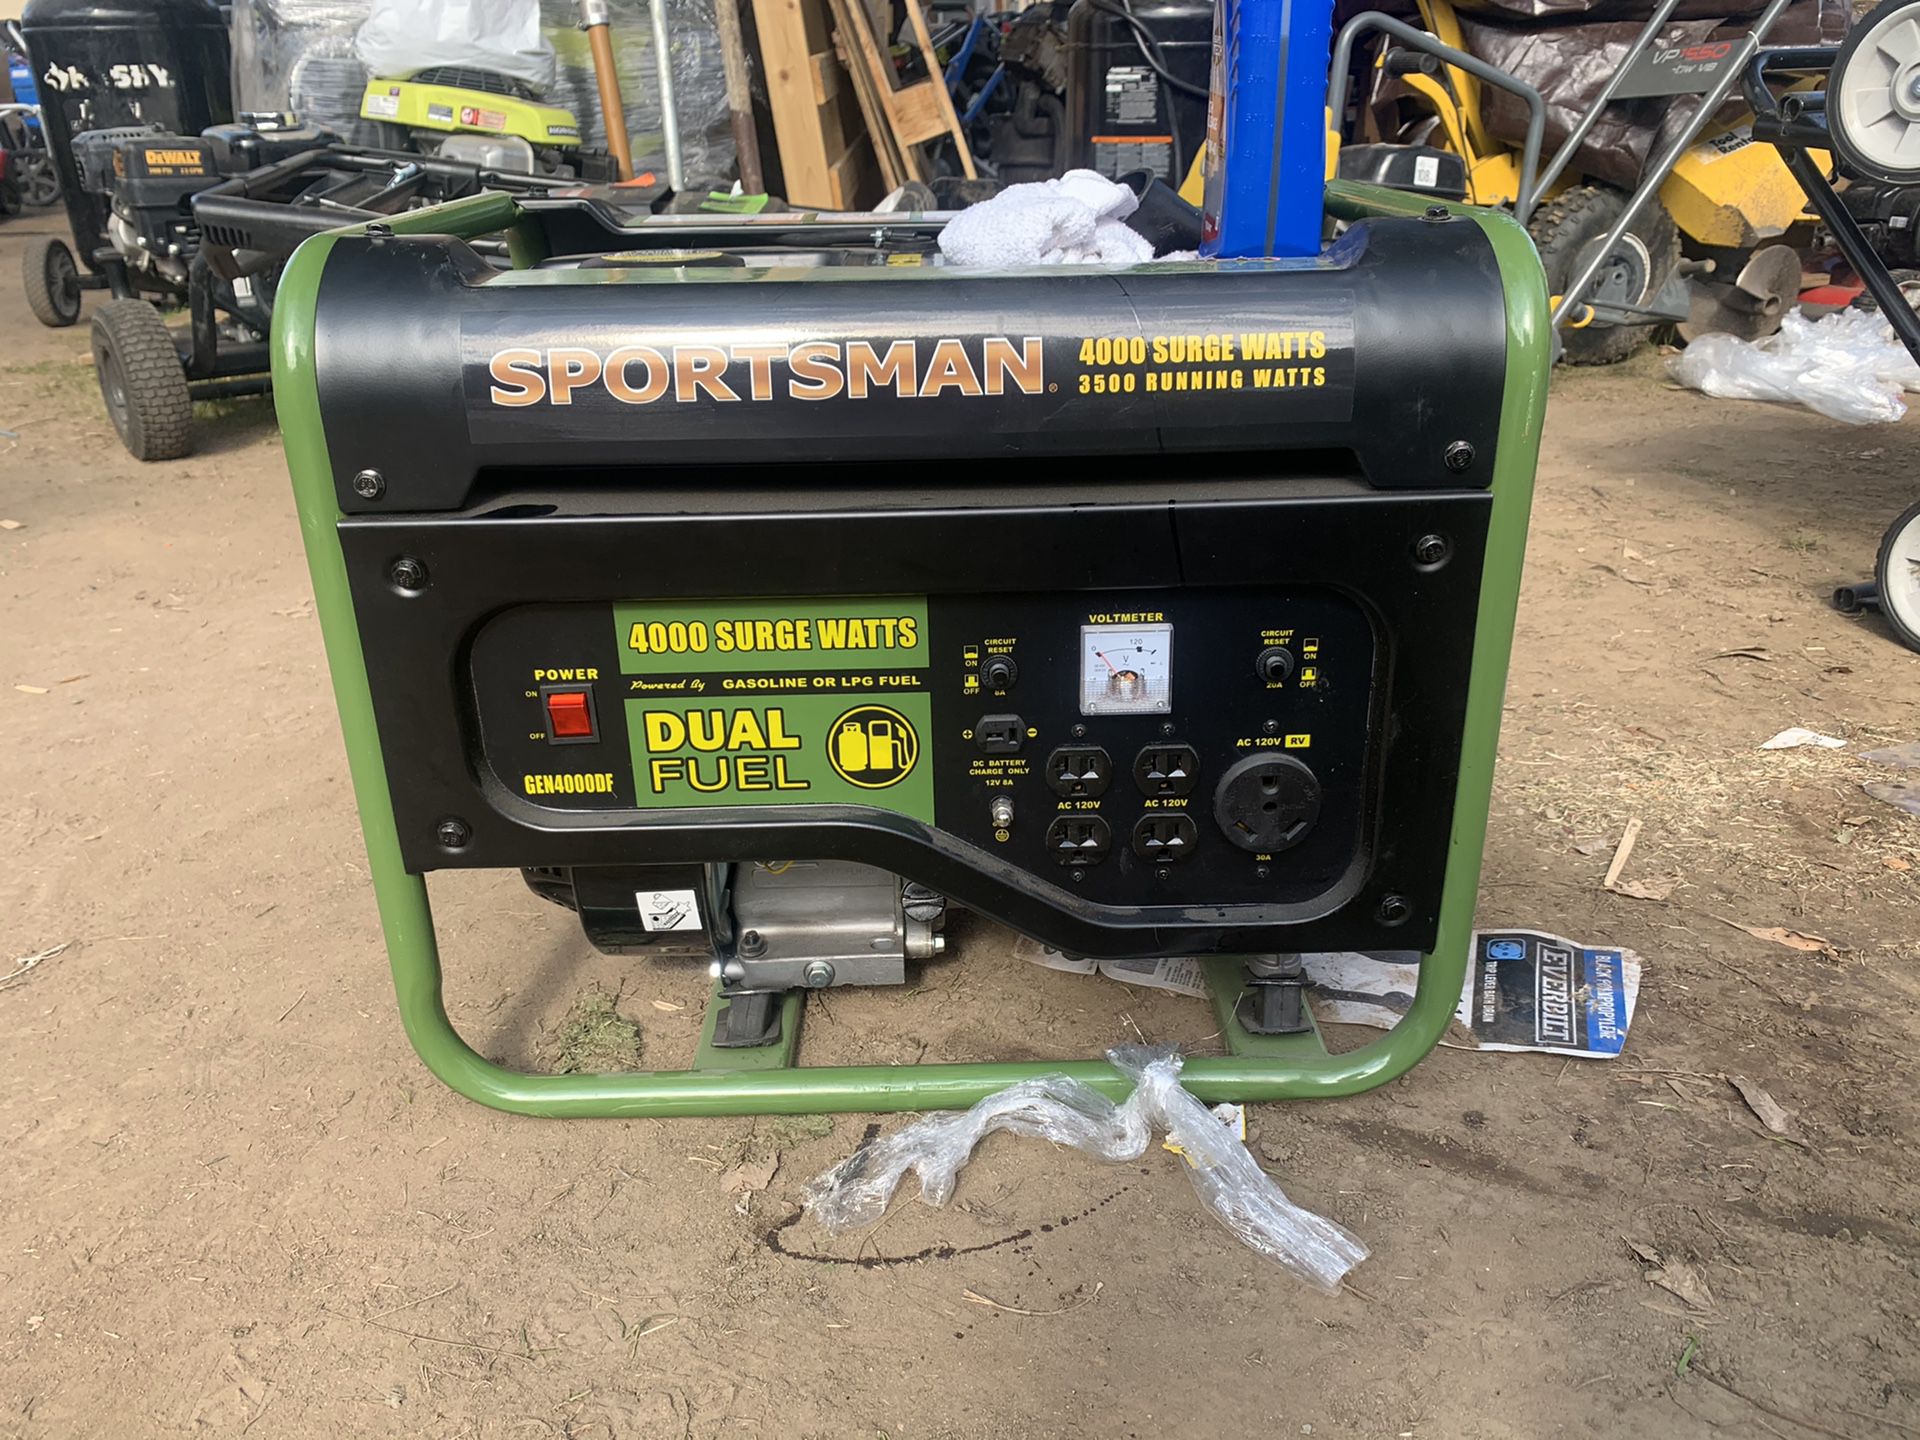 Sportsman duel fuel 4000 generator